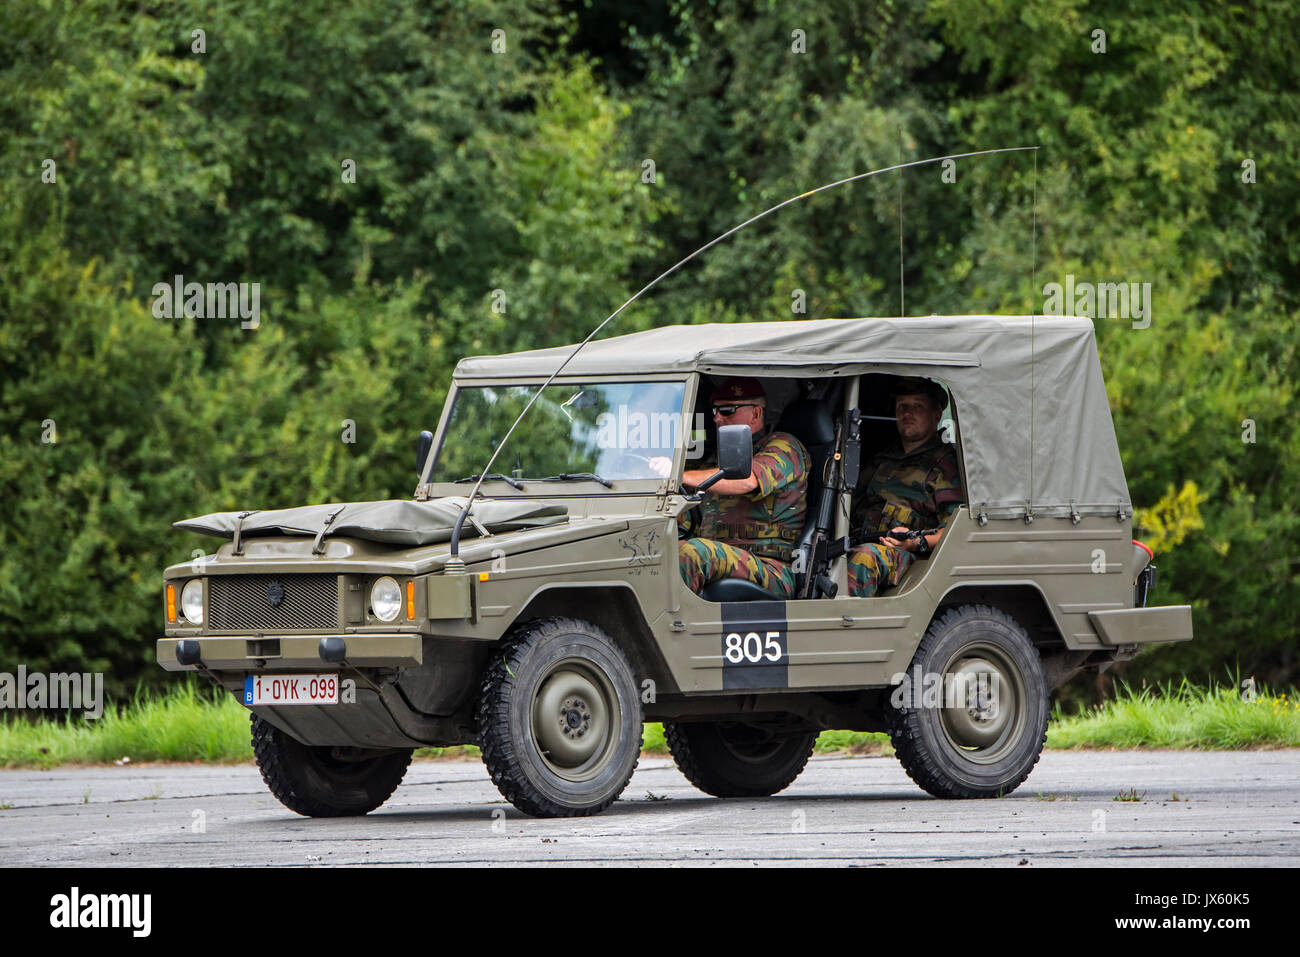 Bombardier Iltis, military light utility vehicle used by the Belgian army, Belgium Stock Photo